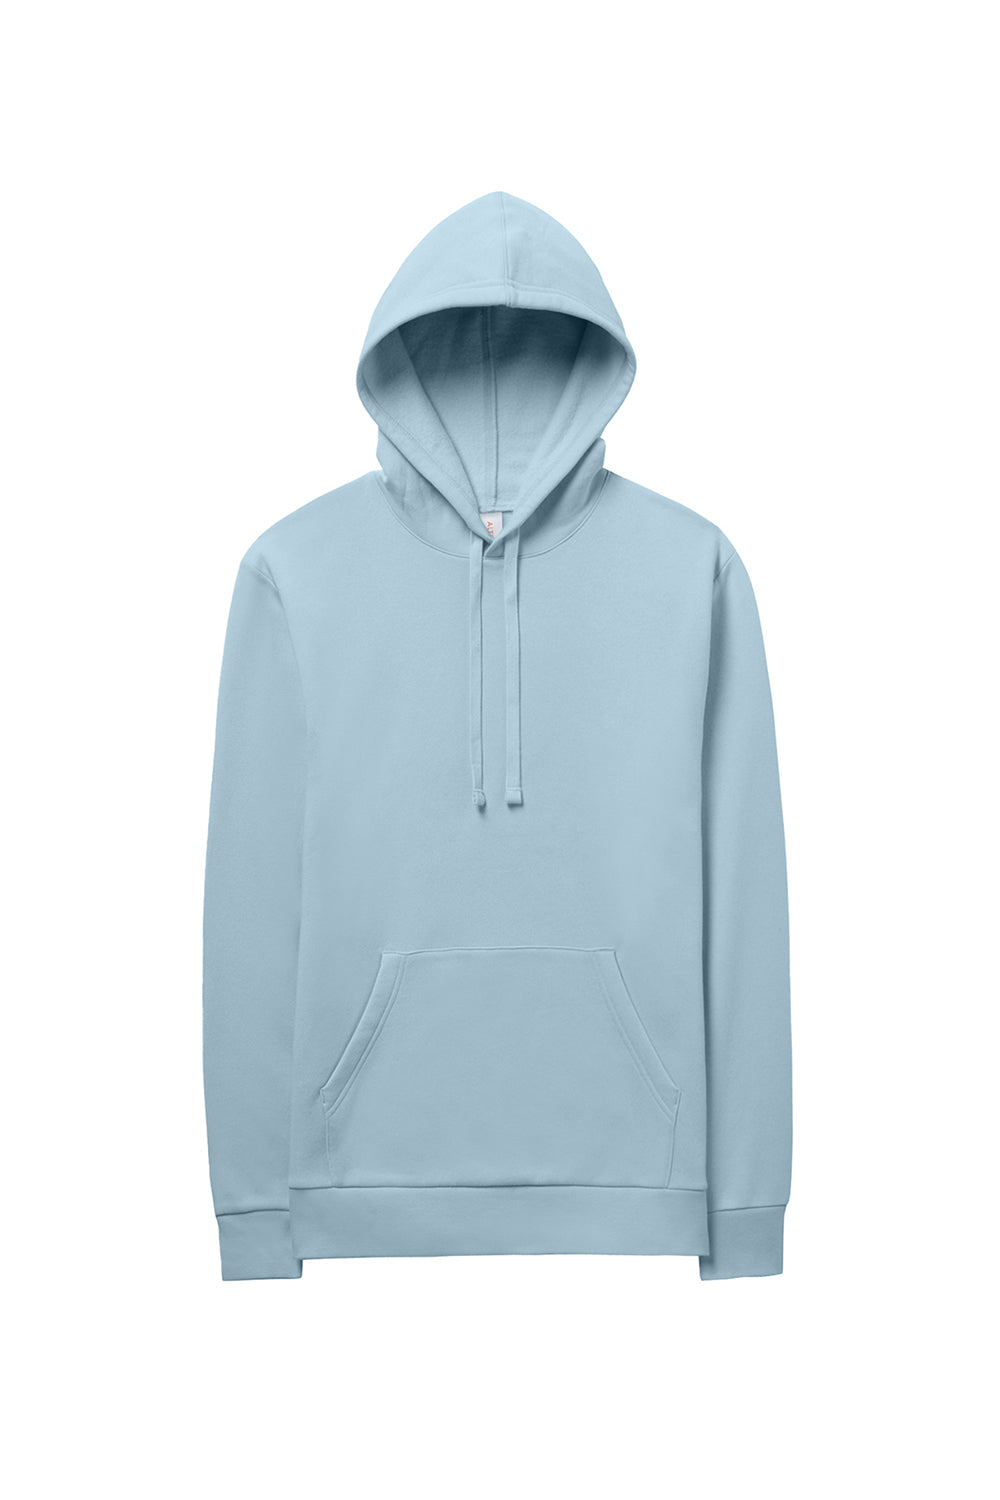 Alternative 8804PF Mens Eco Cozy Fleece Hooded Sweatshirt Hoodie Light Blue Flat Front